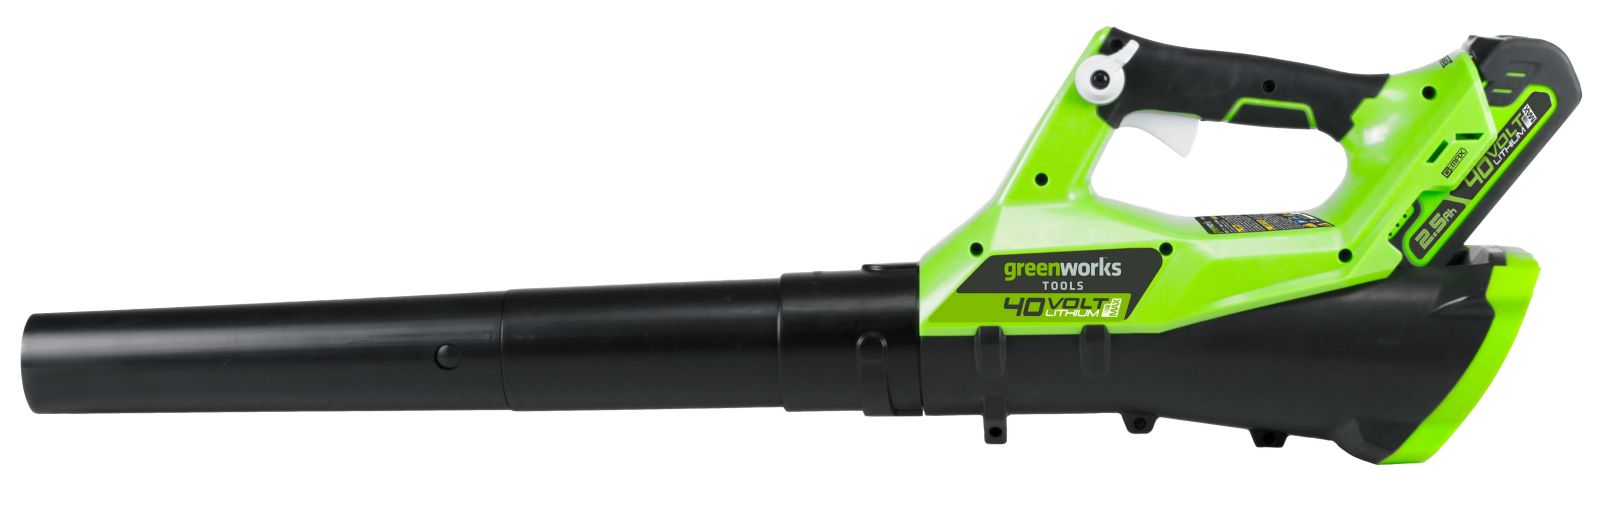 Воздуходувка аккумуляторная GreenWorks G40AB без АКК и ЗУ